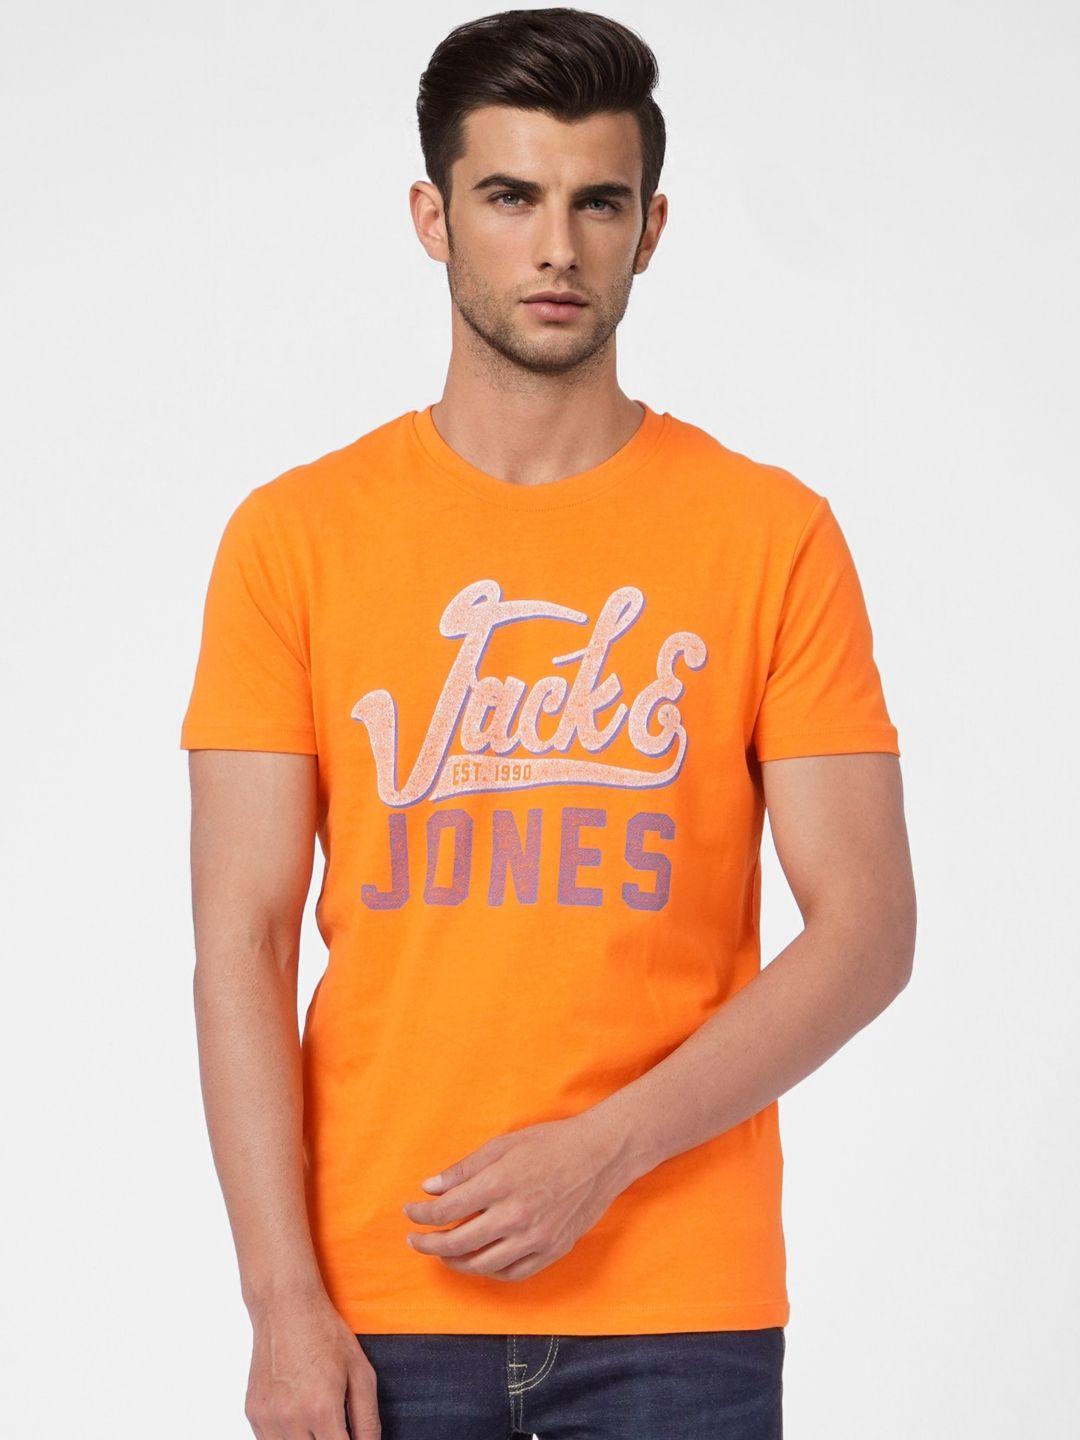 jack & jones men orange & blue brand logo printed slim fit pure cotton t-shirt